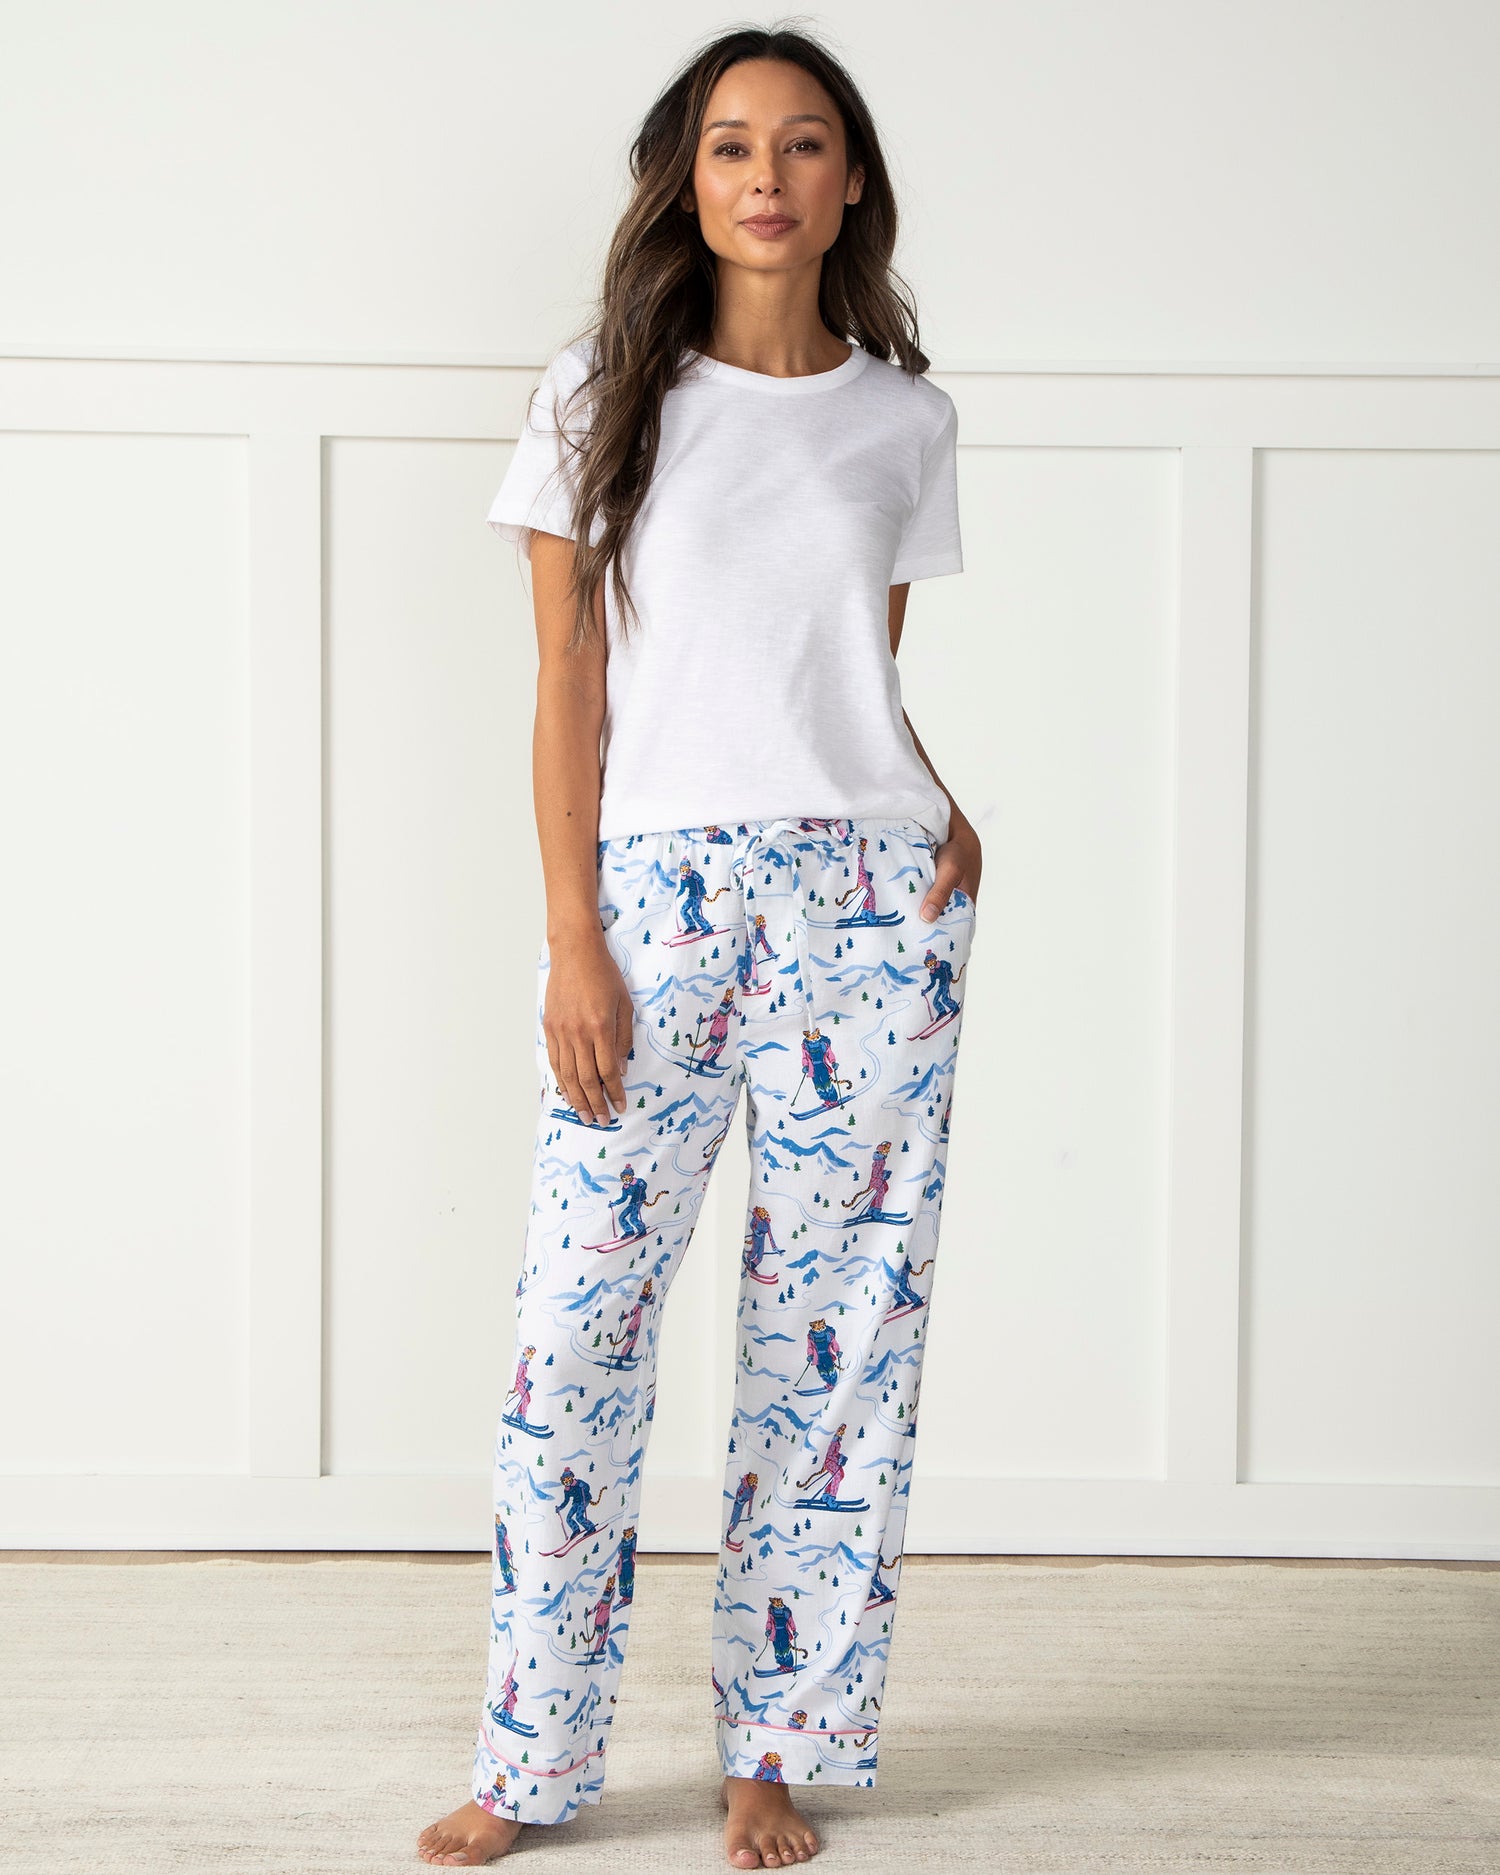 Women's Petite Cotton Lounge Pants Flannel Pajama Pants with